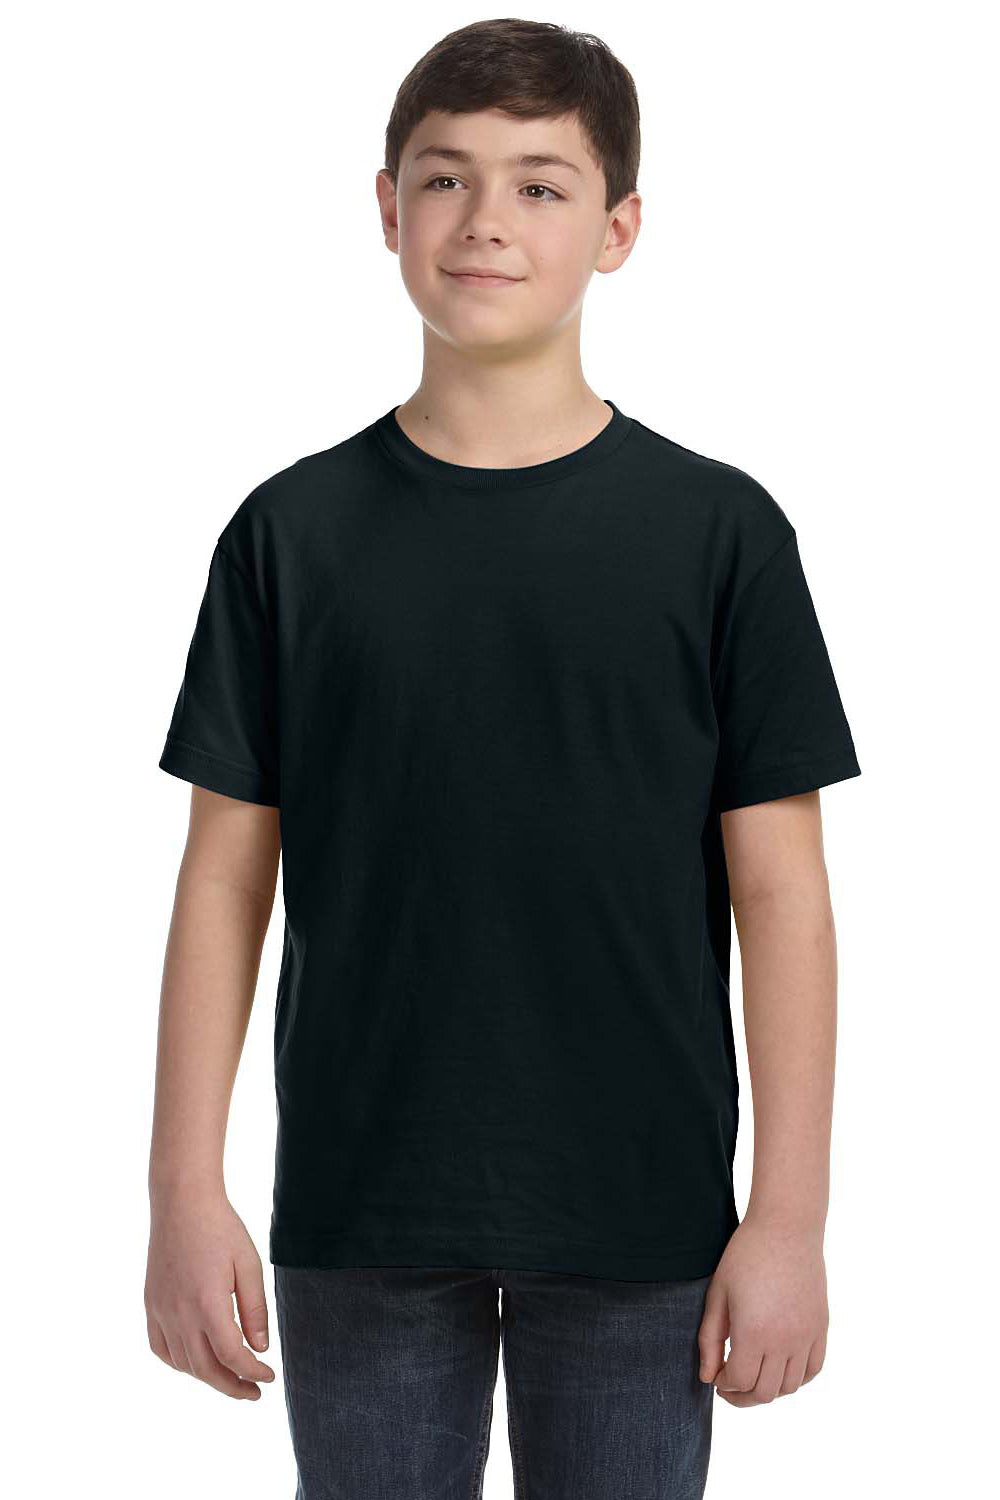 LAT 6101 Youth Fine Jersey Short Sleeve Crewneck T-Shirt Black Front